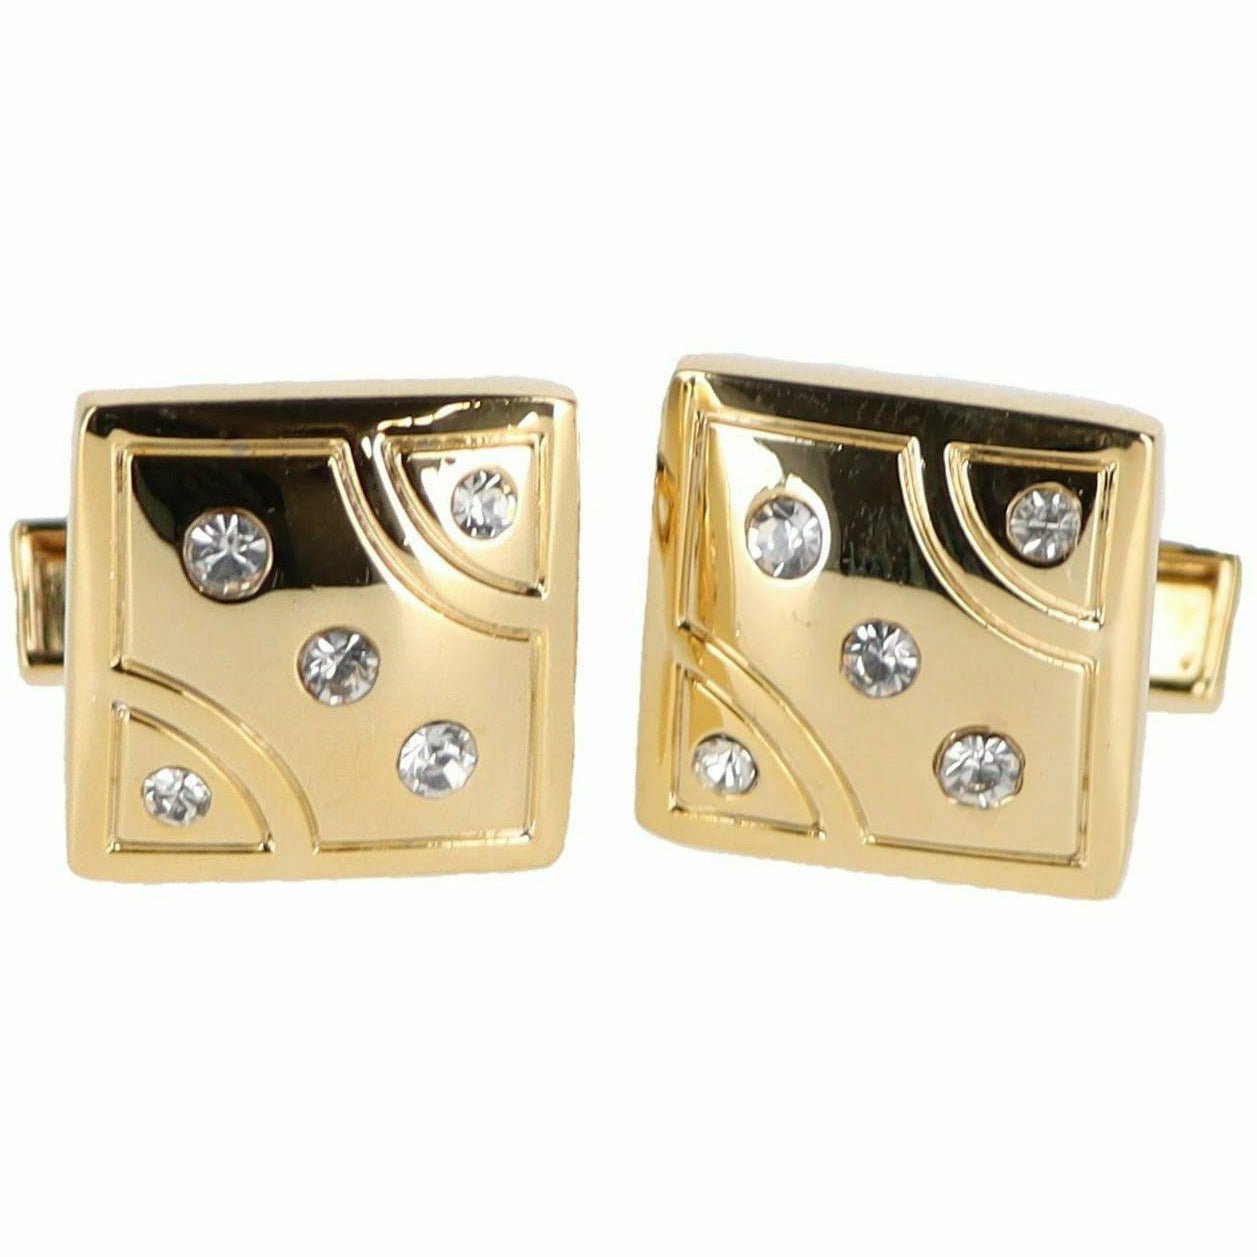 Vittorio Vico Gold & Silver Novelty Cufflinks (CL5000 Series) by Classy Cufflinks - cl-5811 - Classy Cufflinks